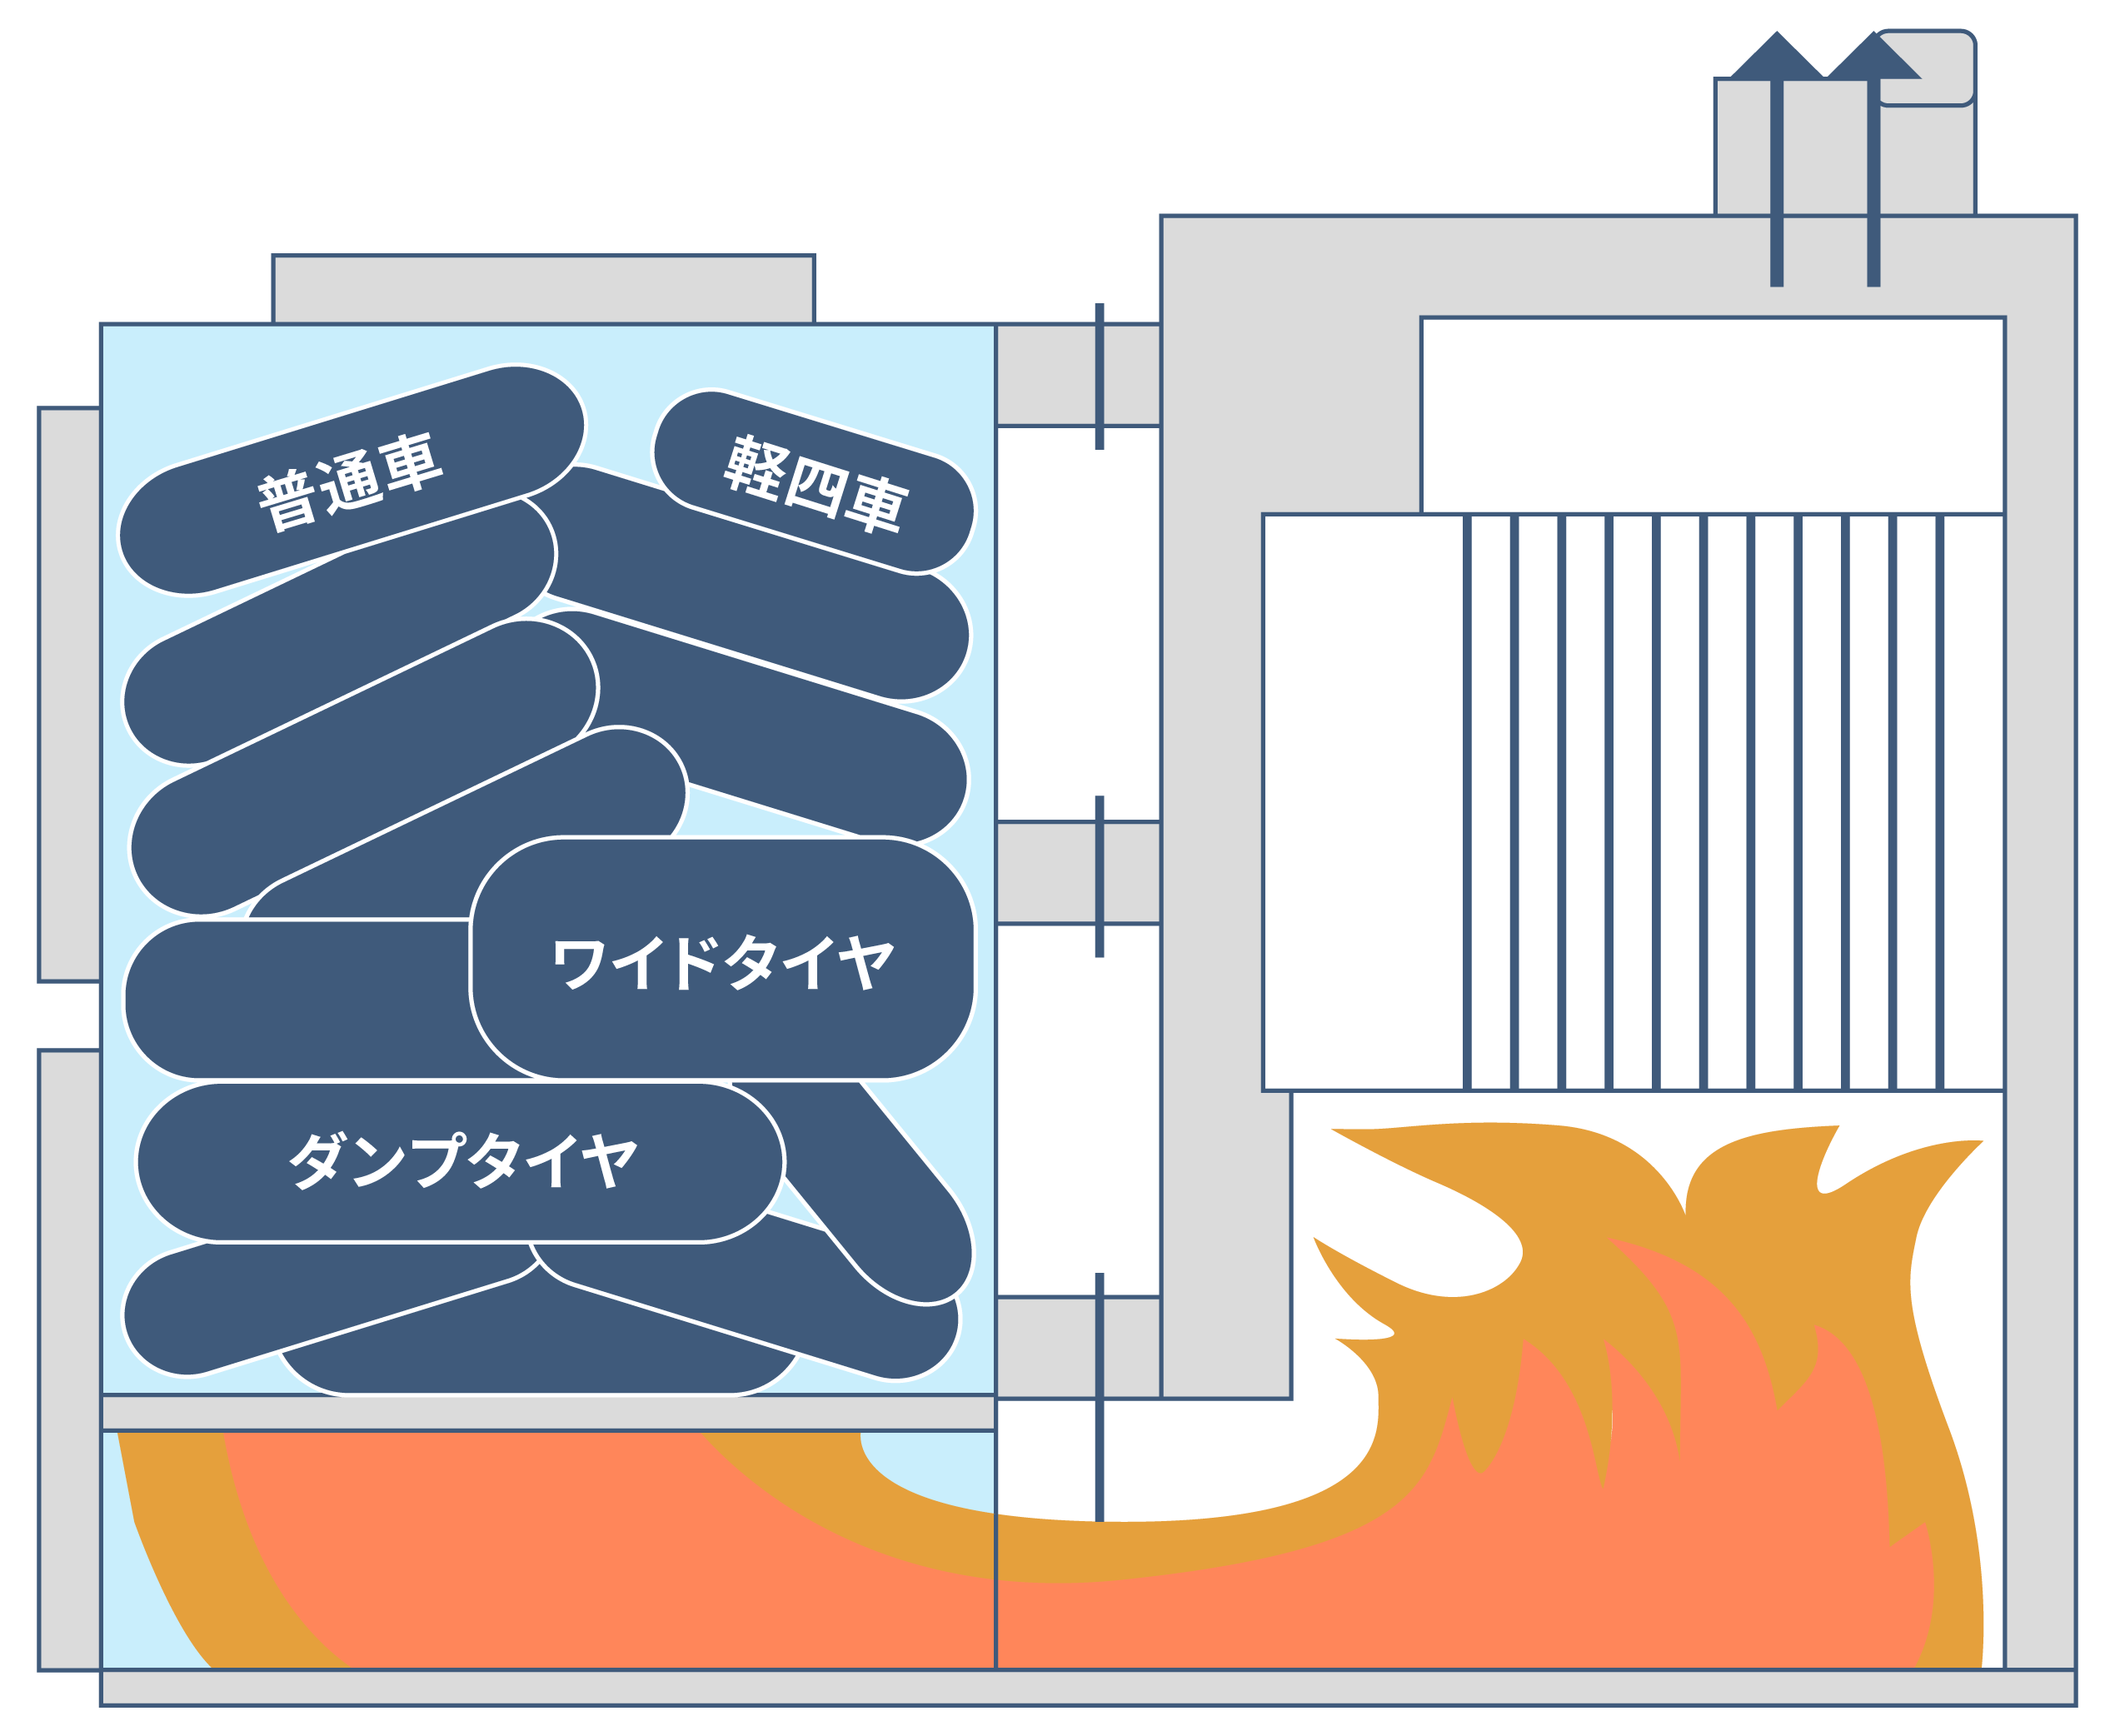 KH-E500型で連続燃焼コントロール範囲の一例